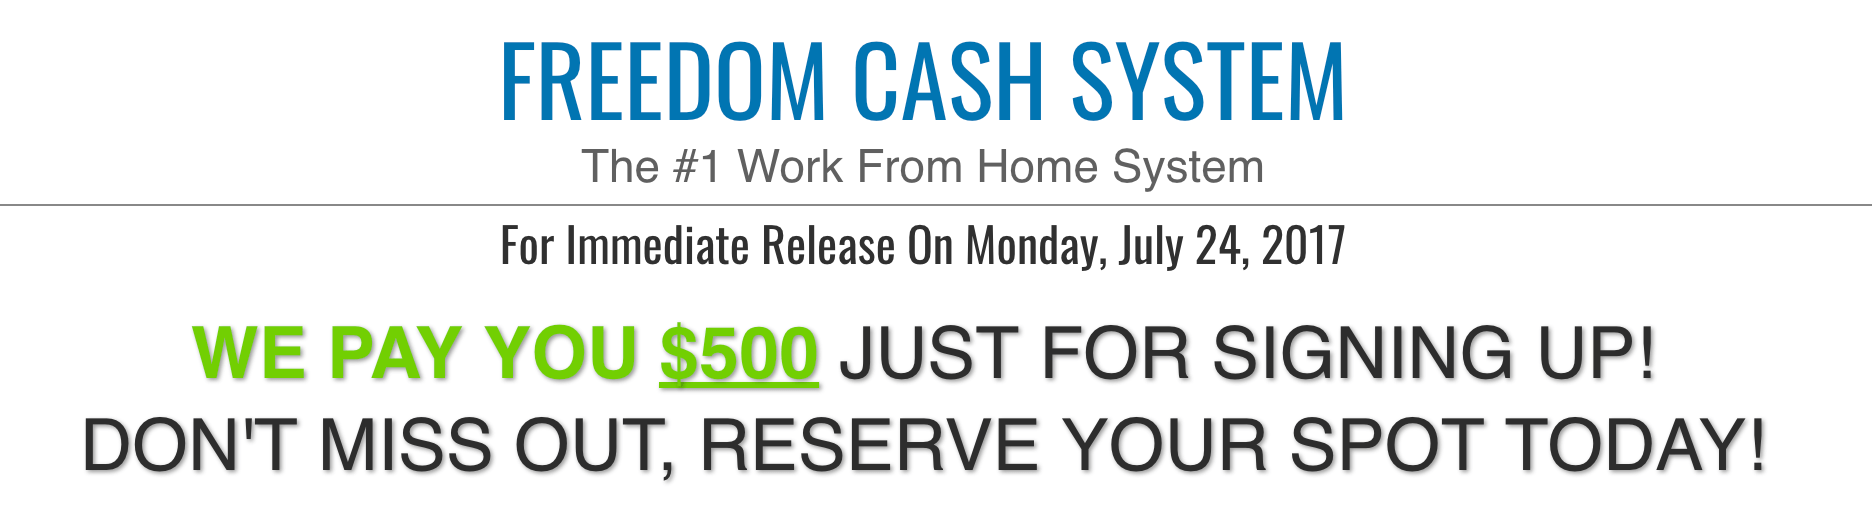 Freedom Cash System